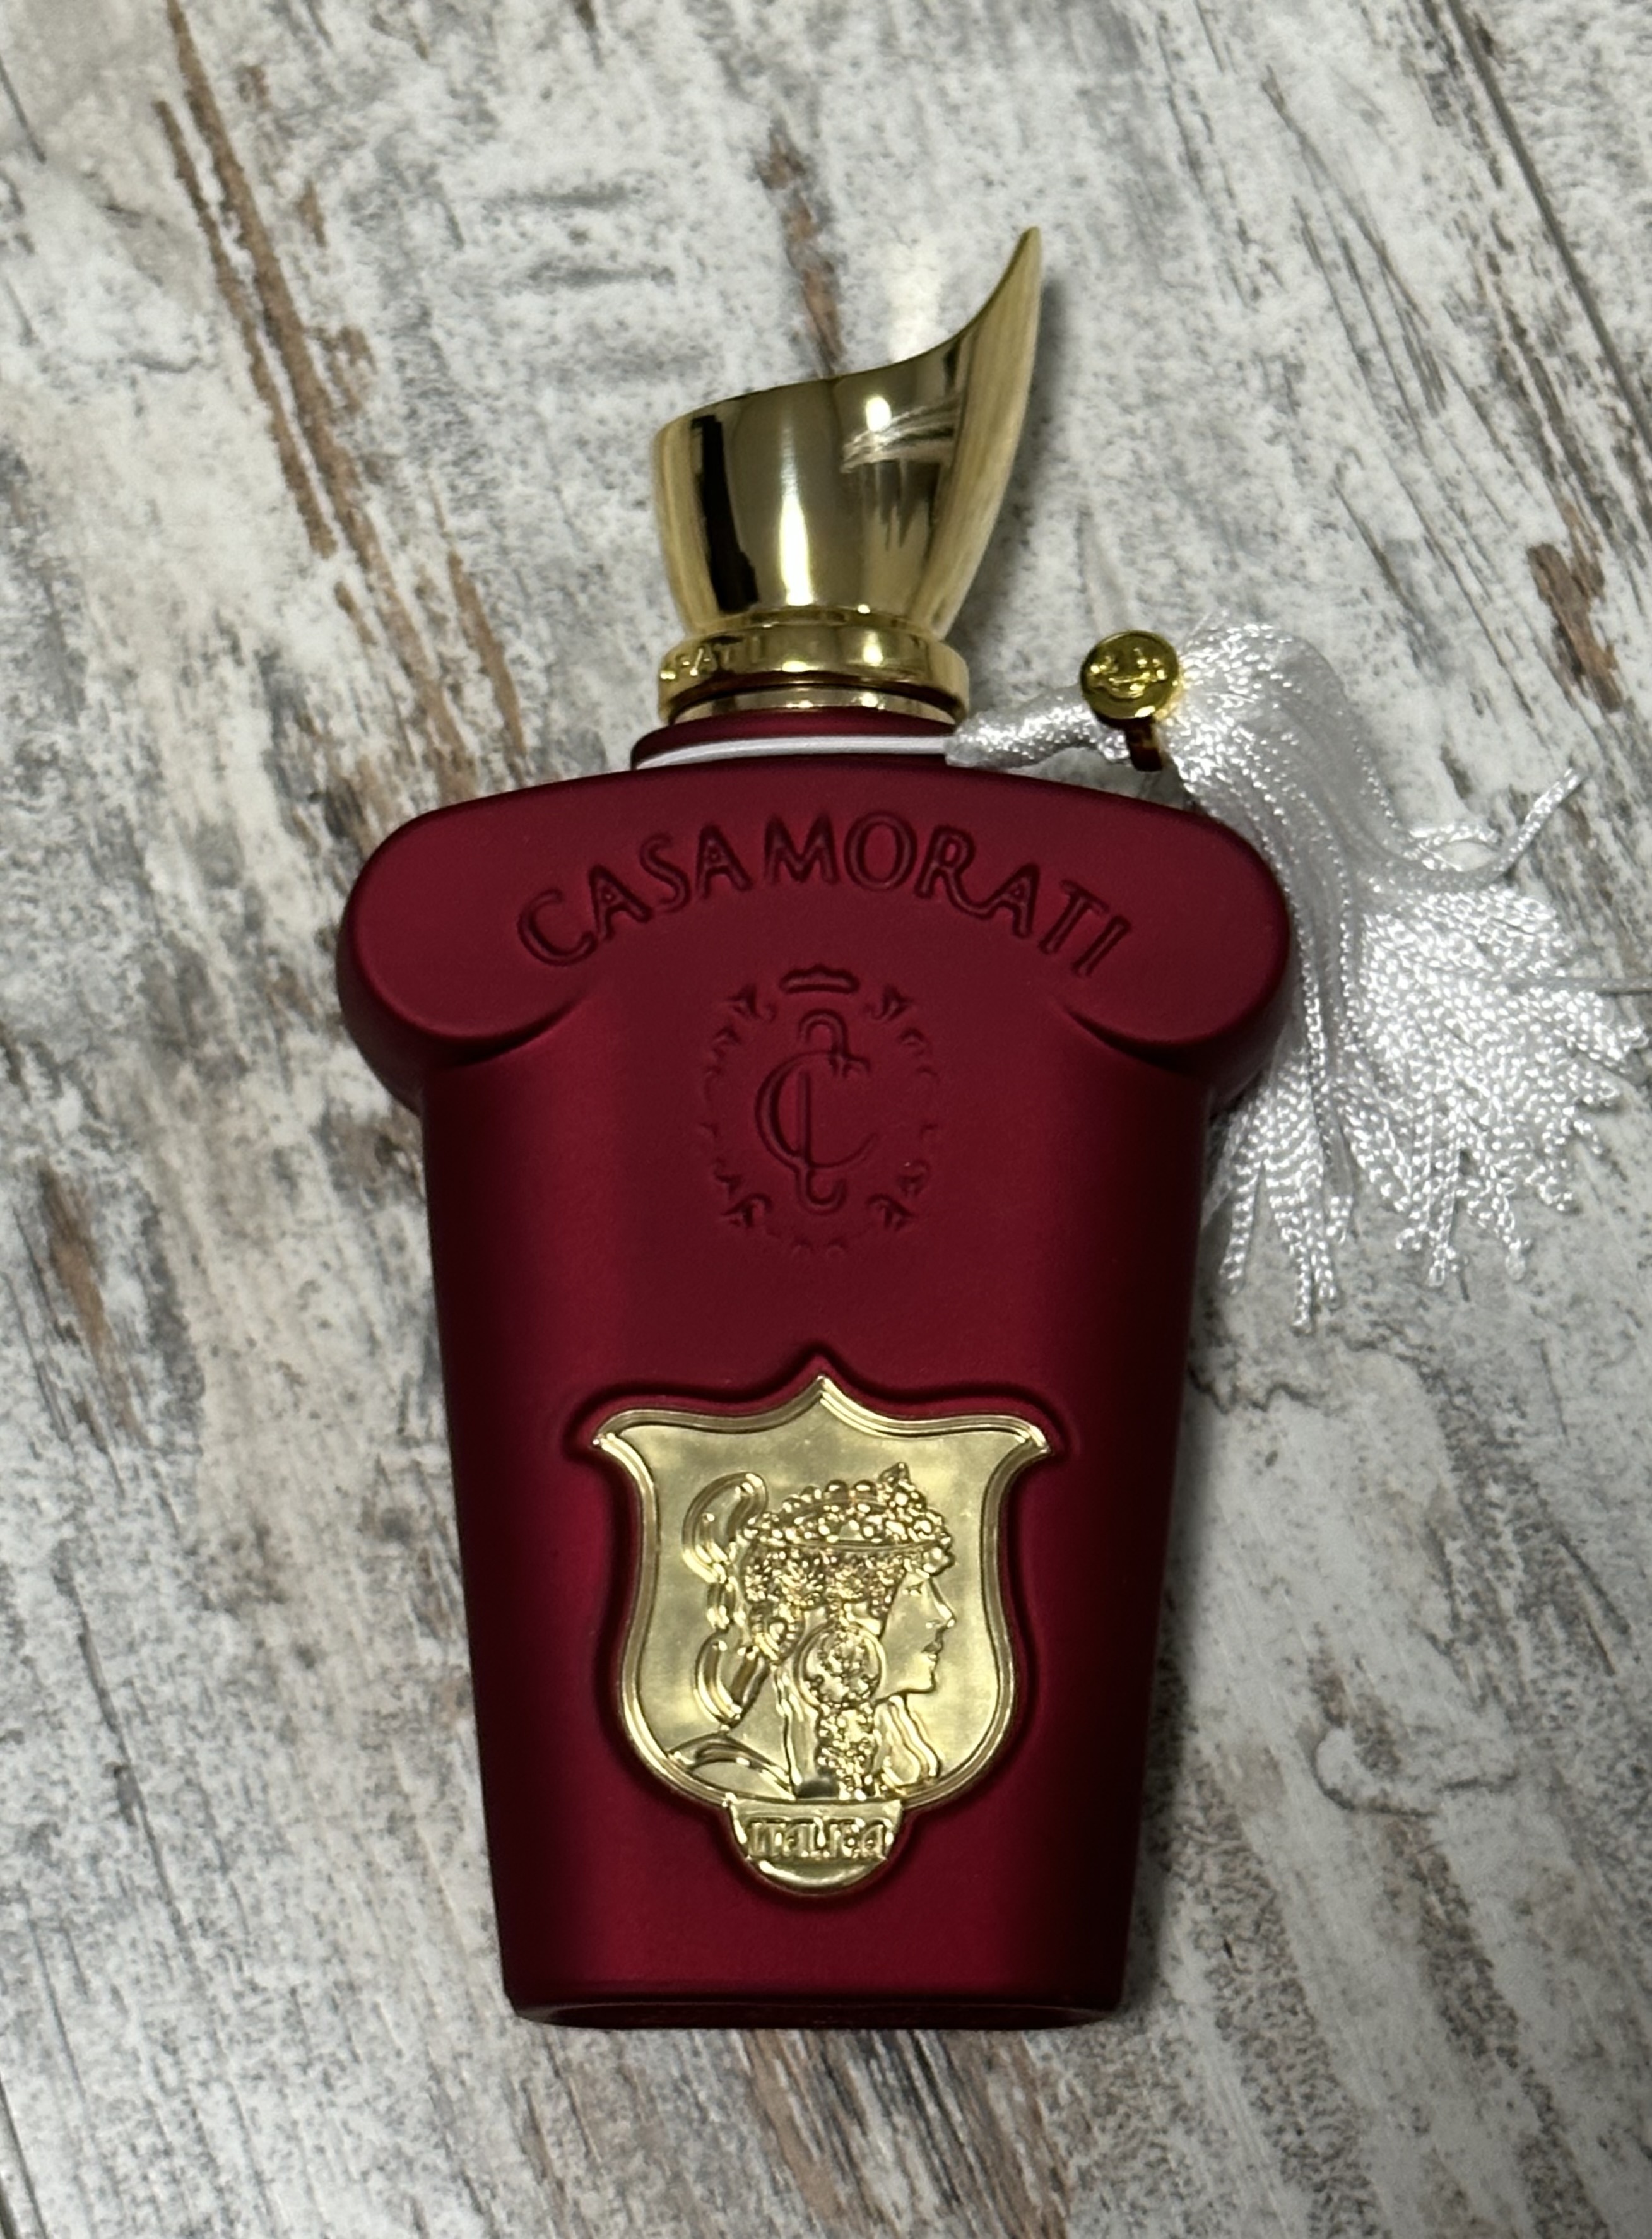 Нішевий парфум Xerjoff Casamorati 1888 Italica